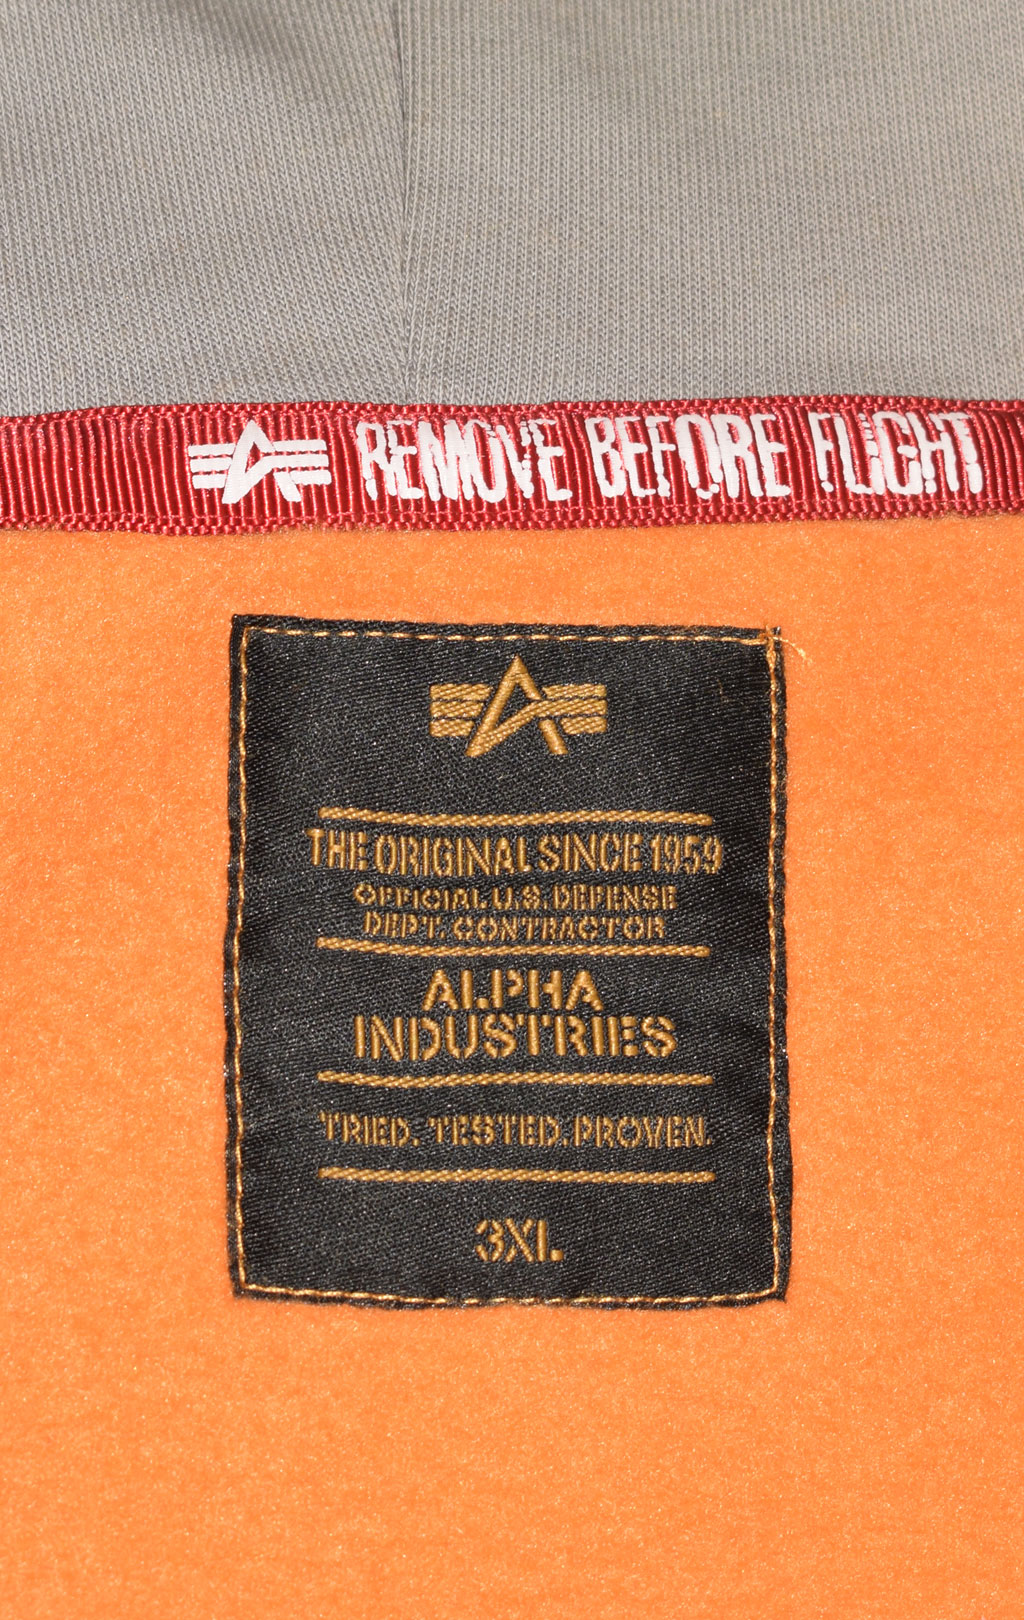 Толстовка ALPHA INDUSTRIES NASA SPACE CAMP HOODY alpha orange 